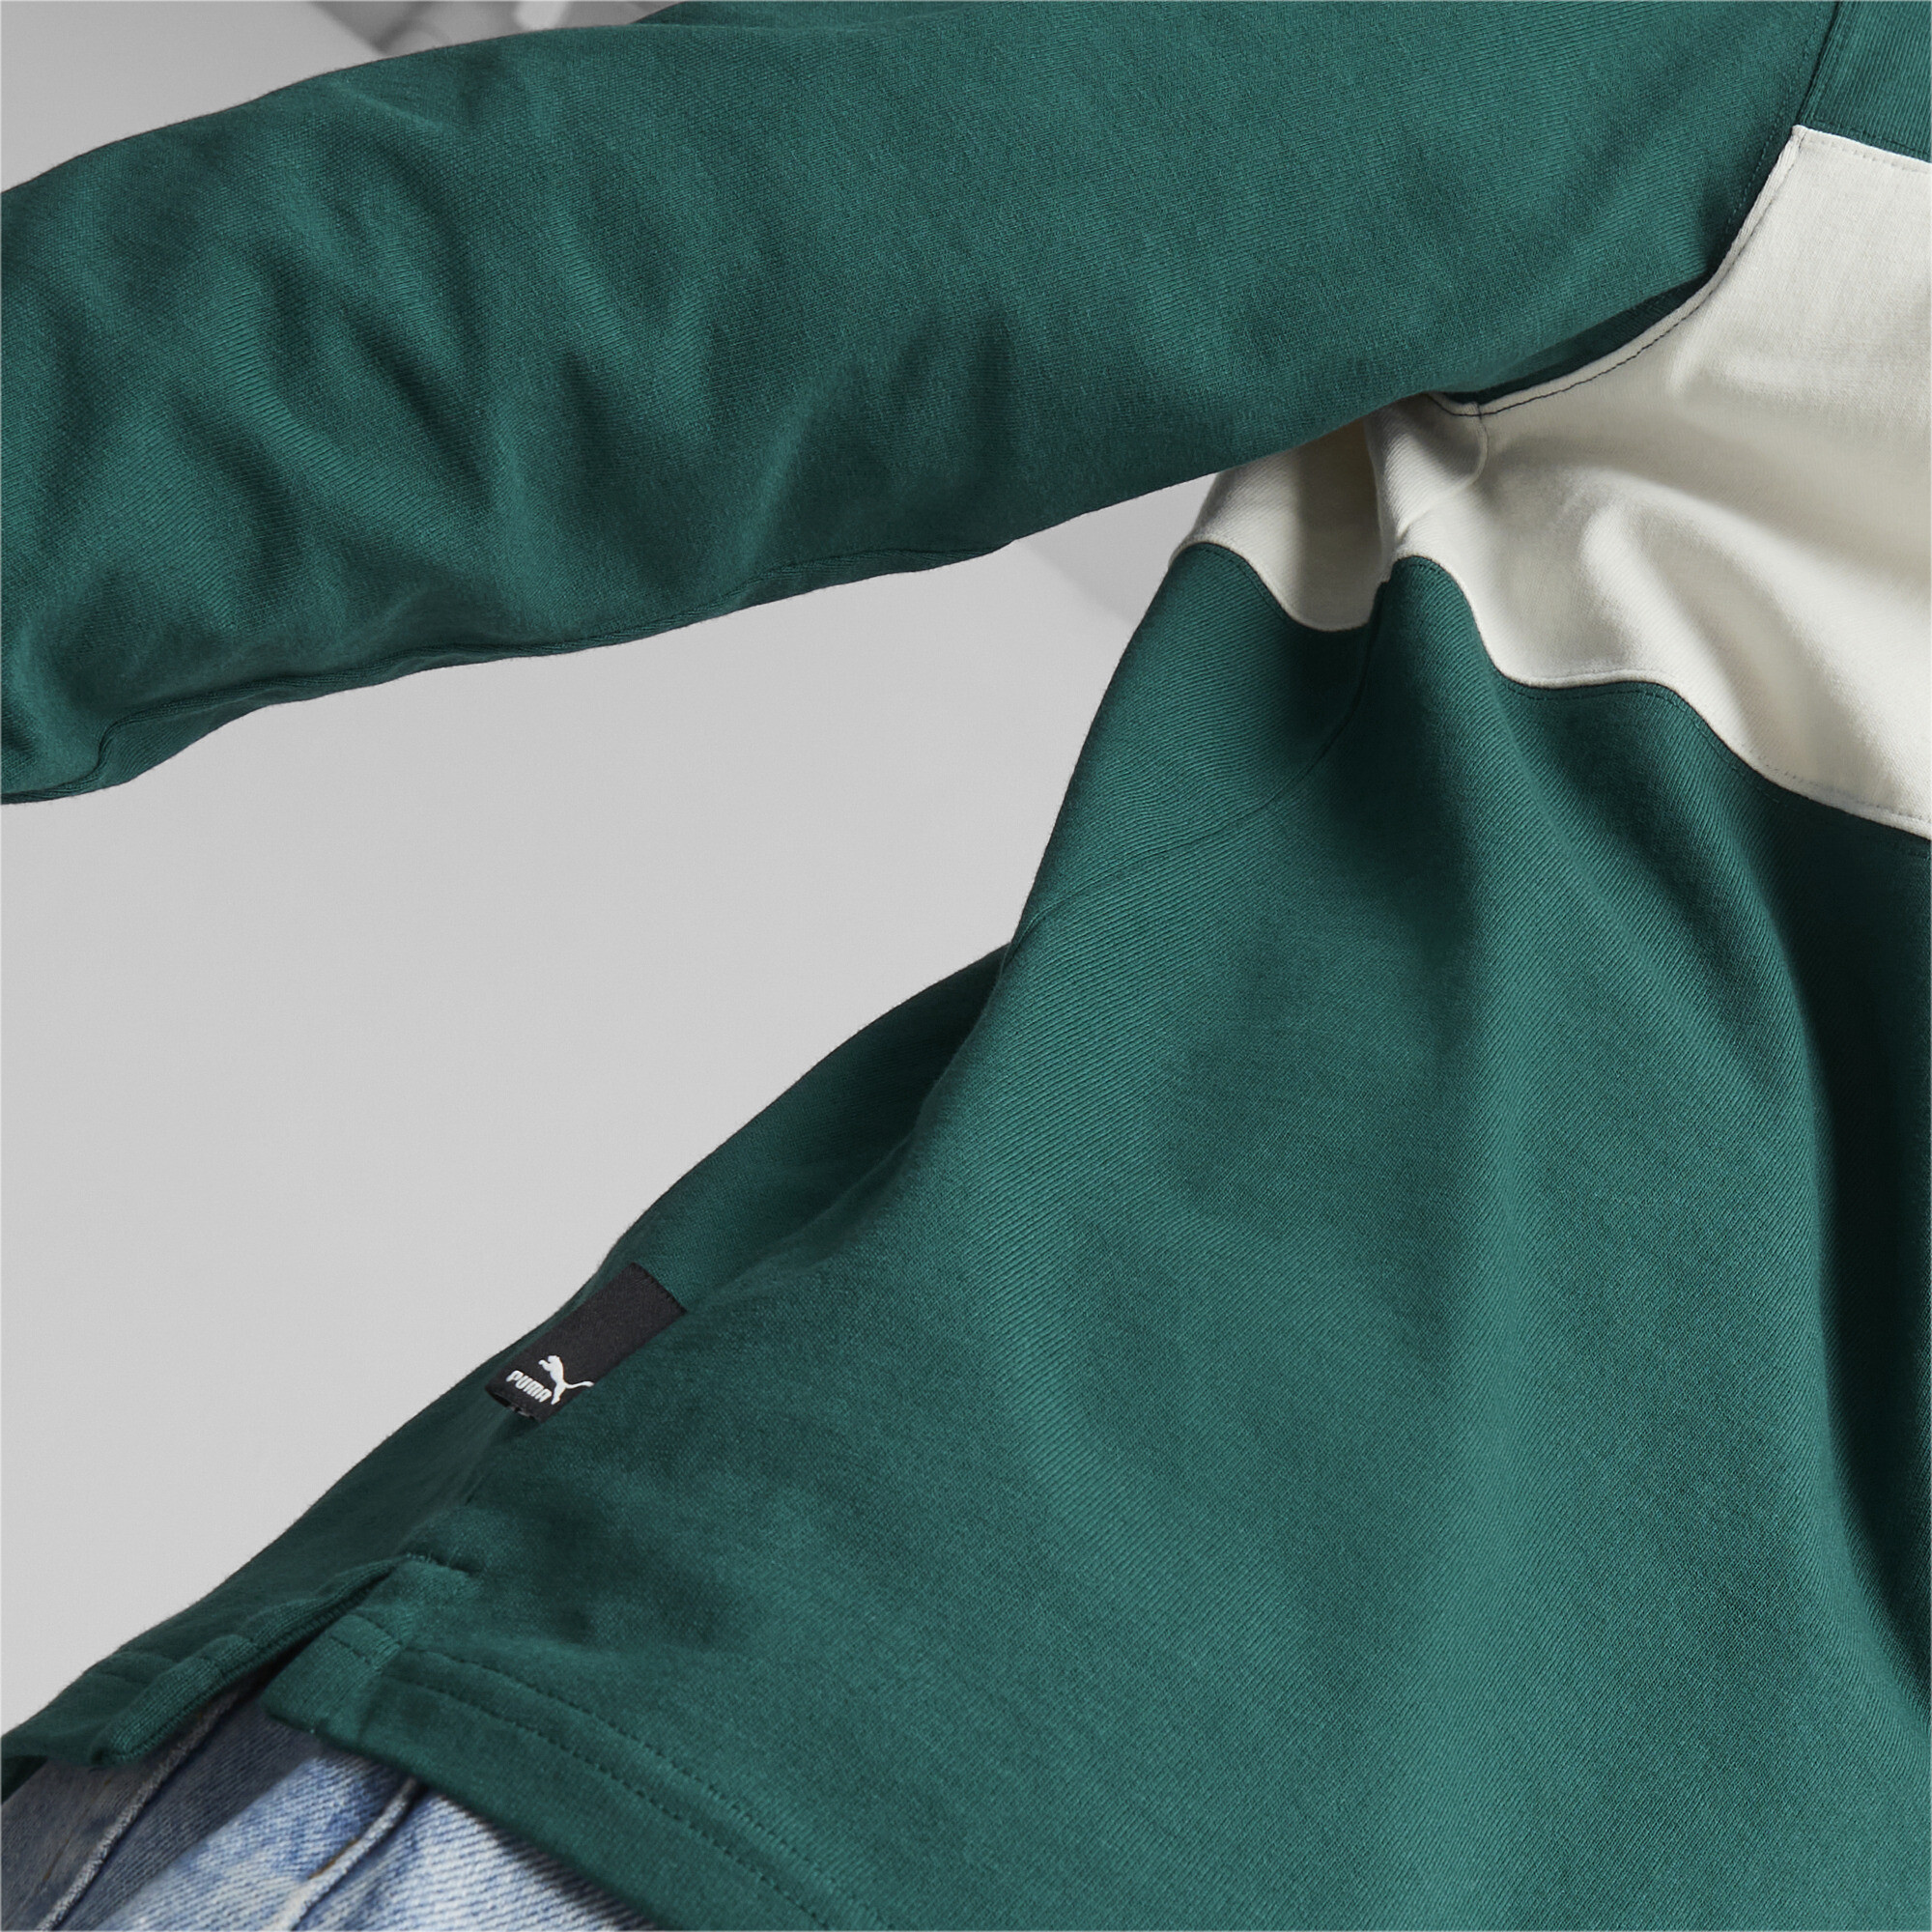 Men's Puma Team's Rugby Shirt, Green, Size XL, Clothing